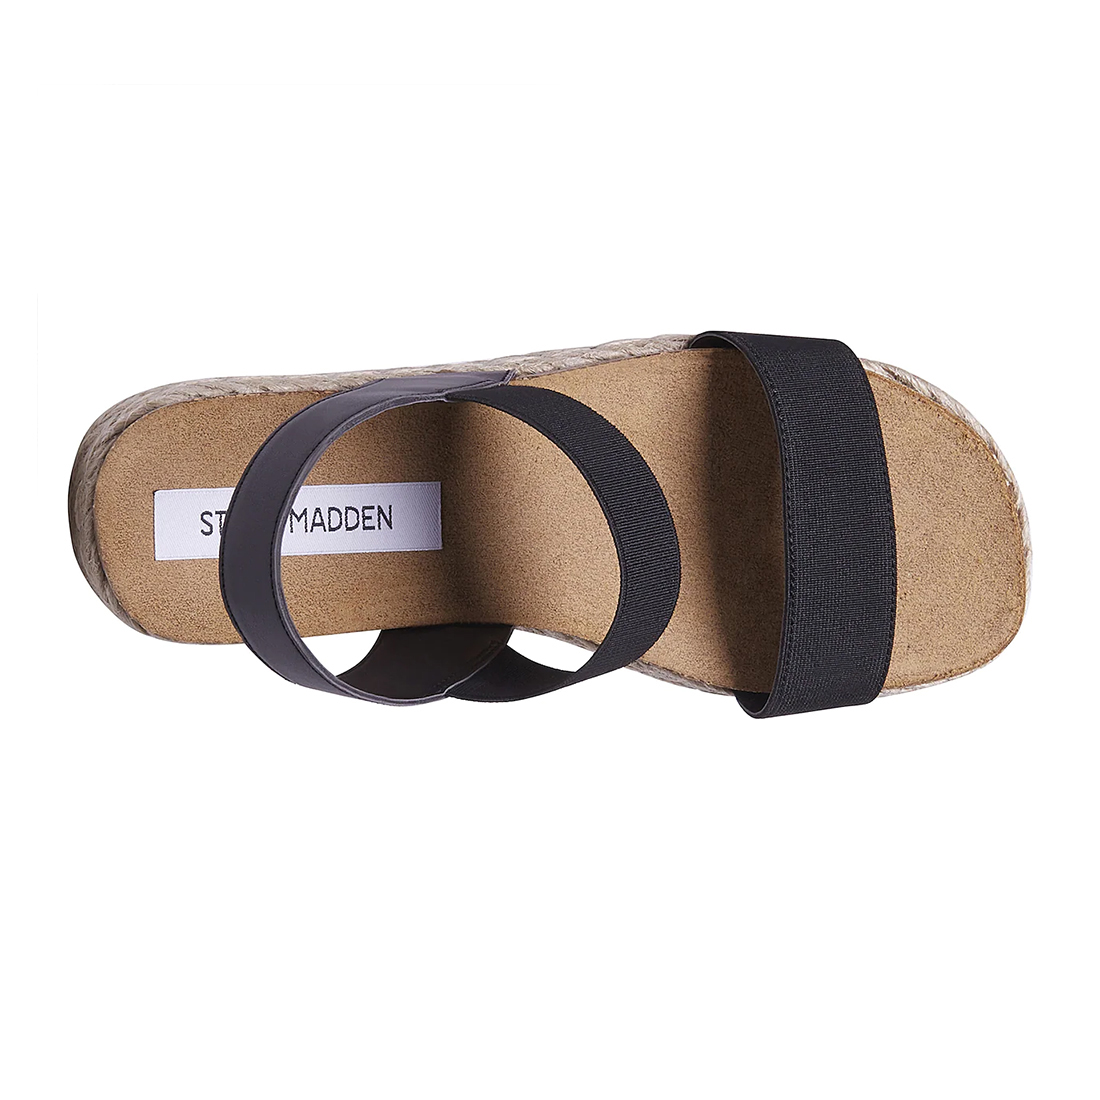 steve madden jaklin espadrille style platform sandal in black 86385